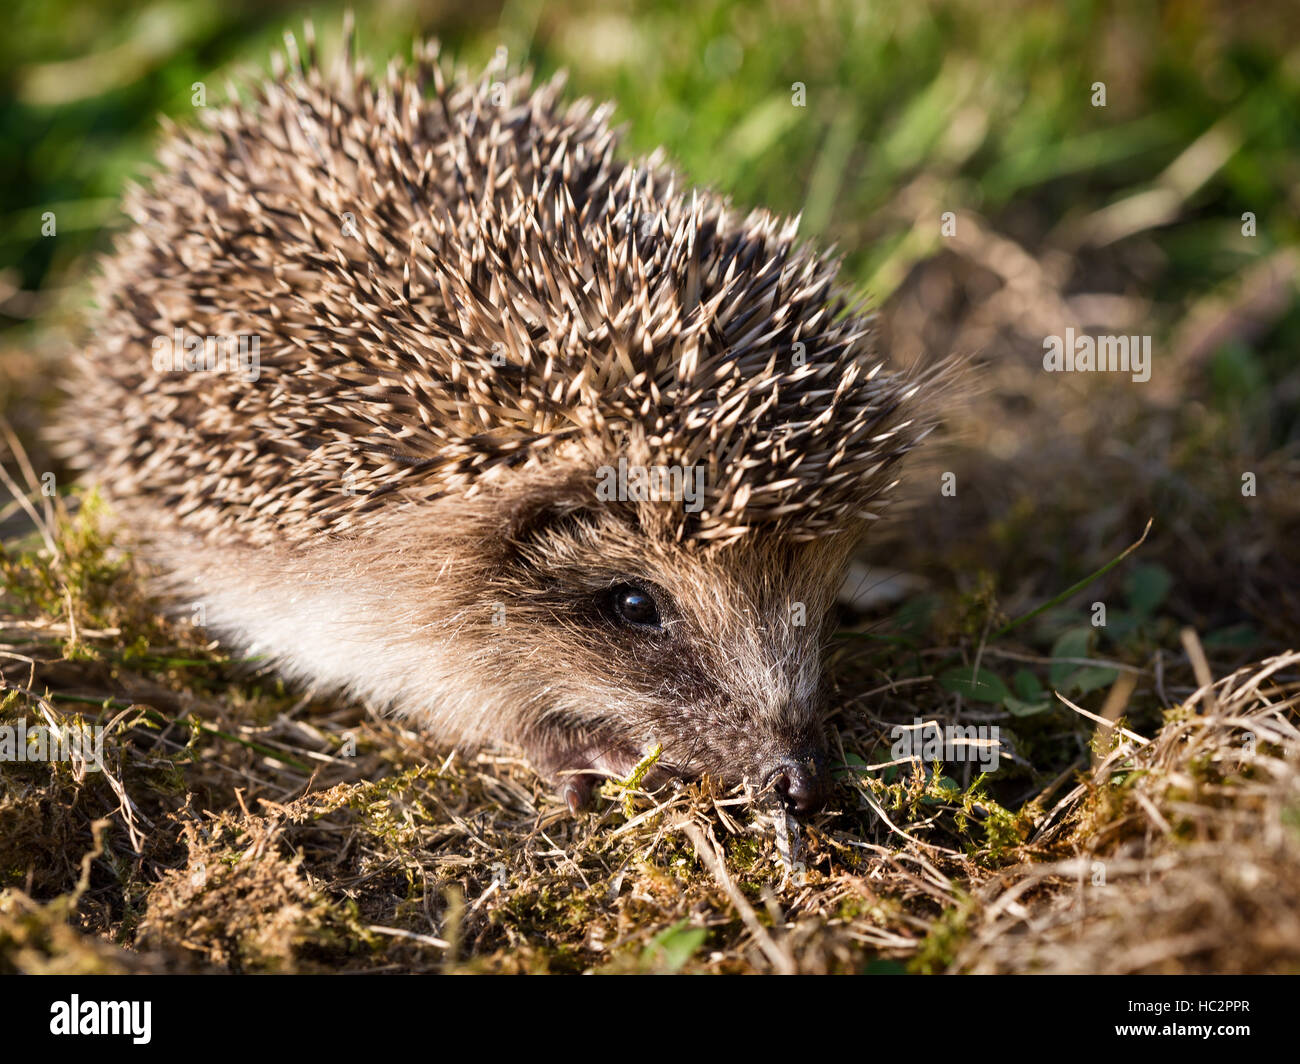 hedgehog on grass Stock Photo